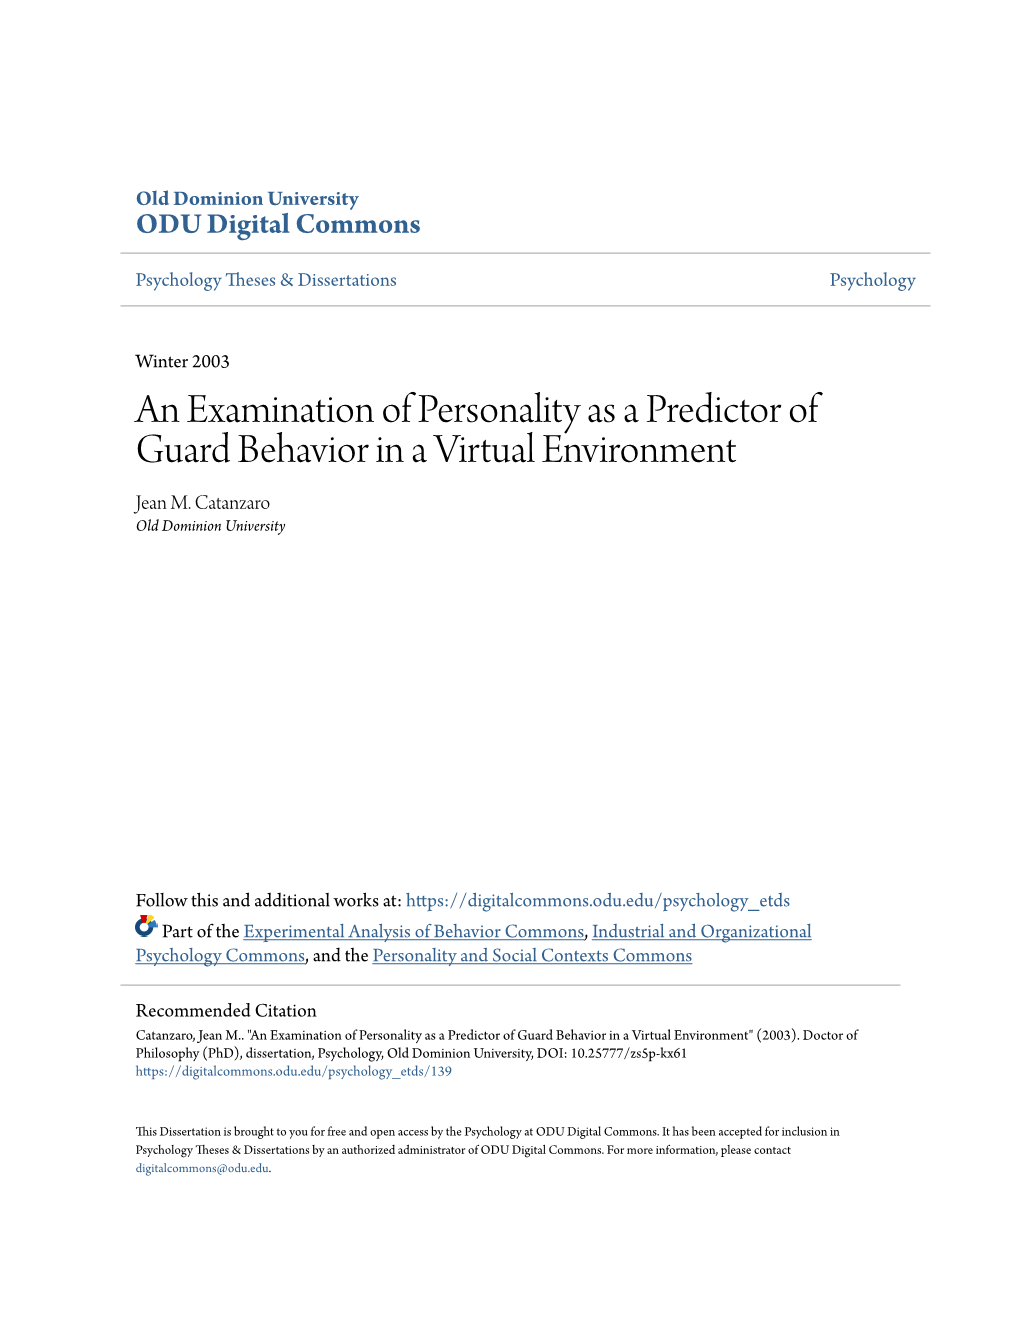 An Examination of Personality As a Predictor of Guard Behavior in a Virtual Environment Jean M